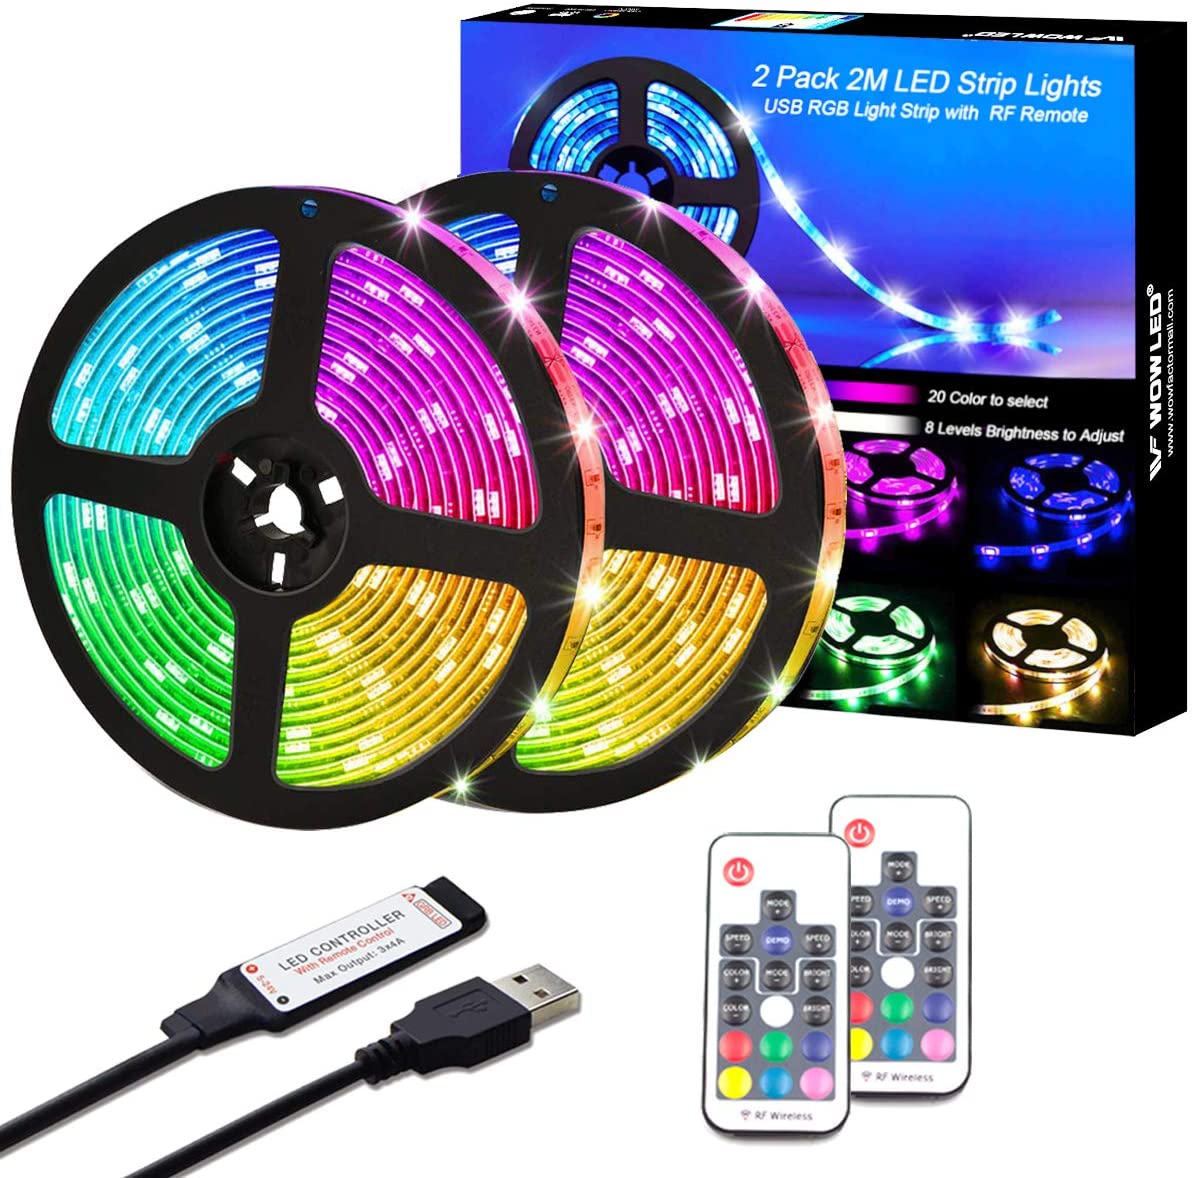 spectrum Voorbijganger sokken UCINNOVATE 2X 2M USB RGB LED Strip Light with RF Remote, RGB 5050 Wate